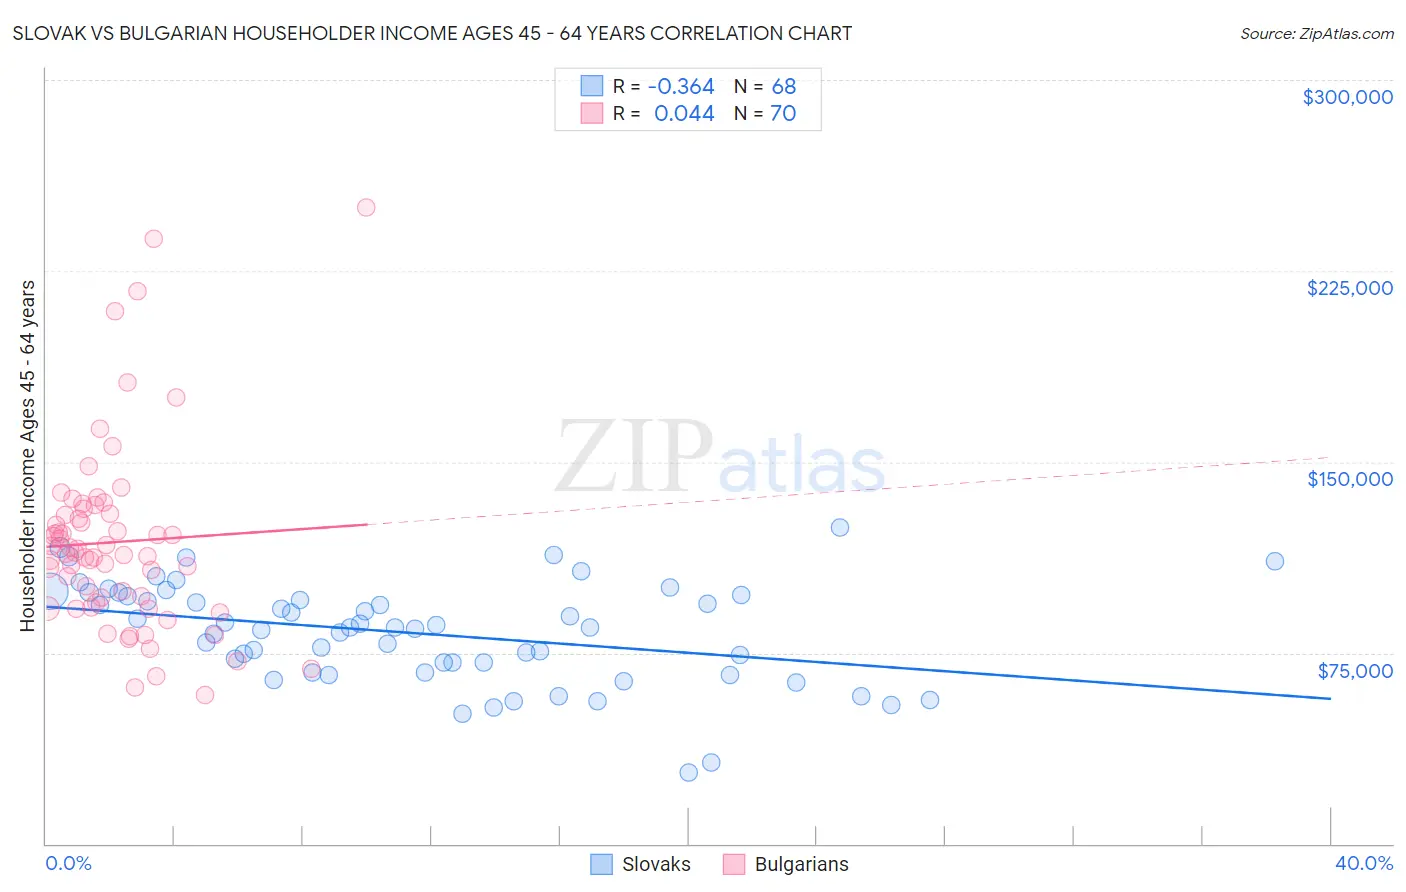 Slovak vs Bulgarian Householder Income Ages 45 - 64 years